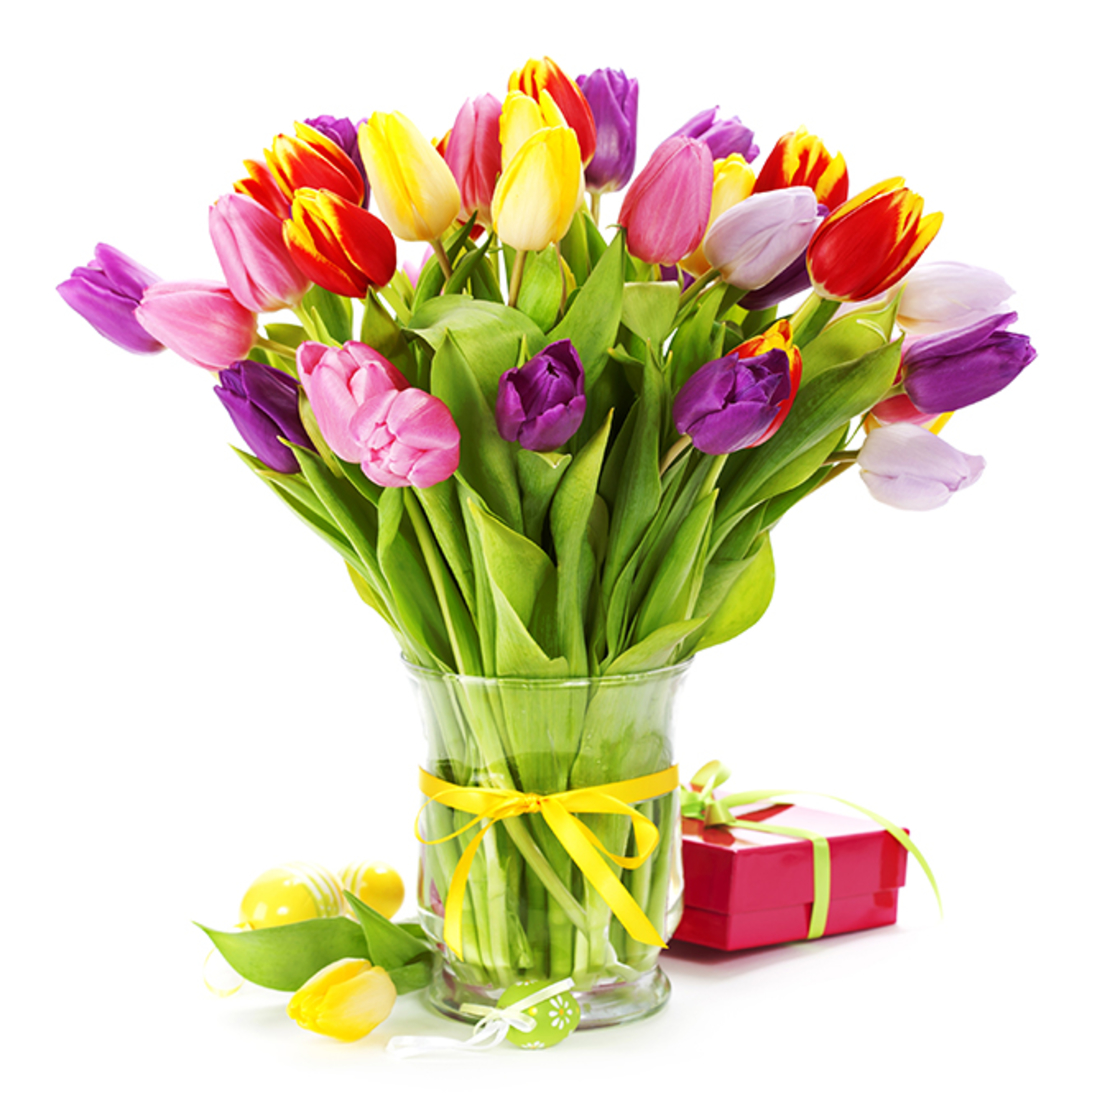 Arranging tulips in a vase